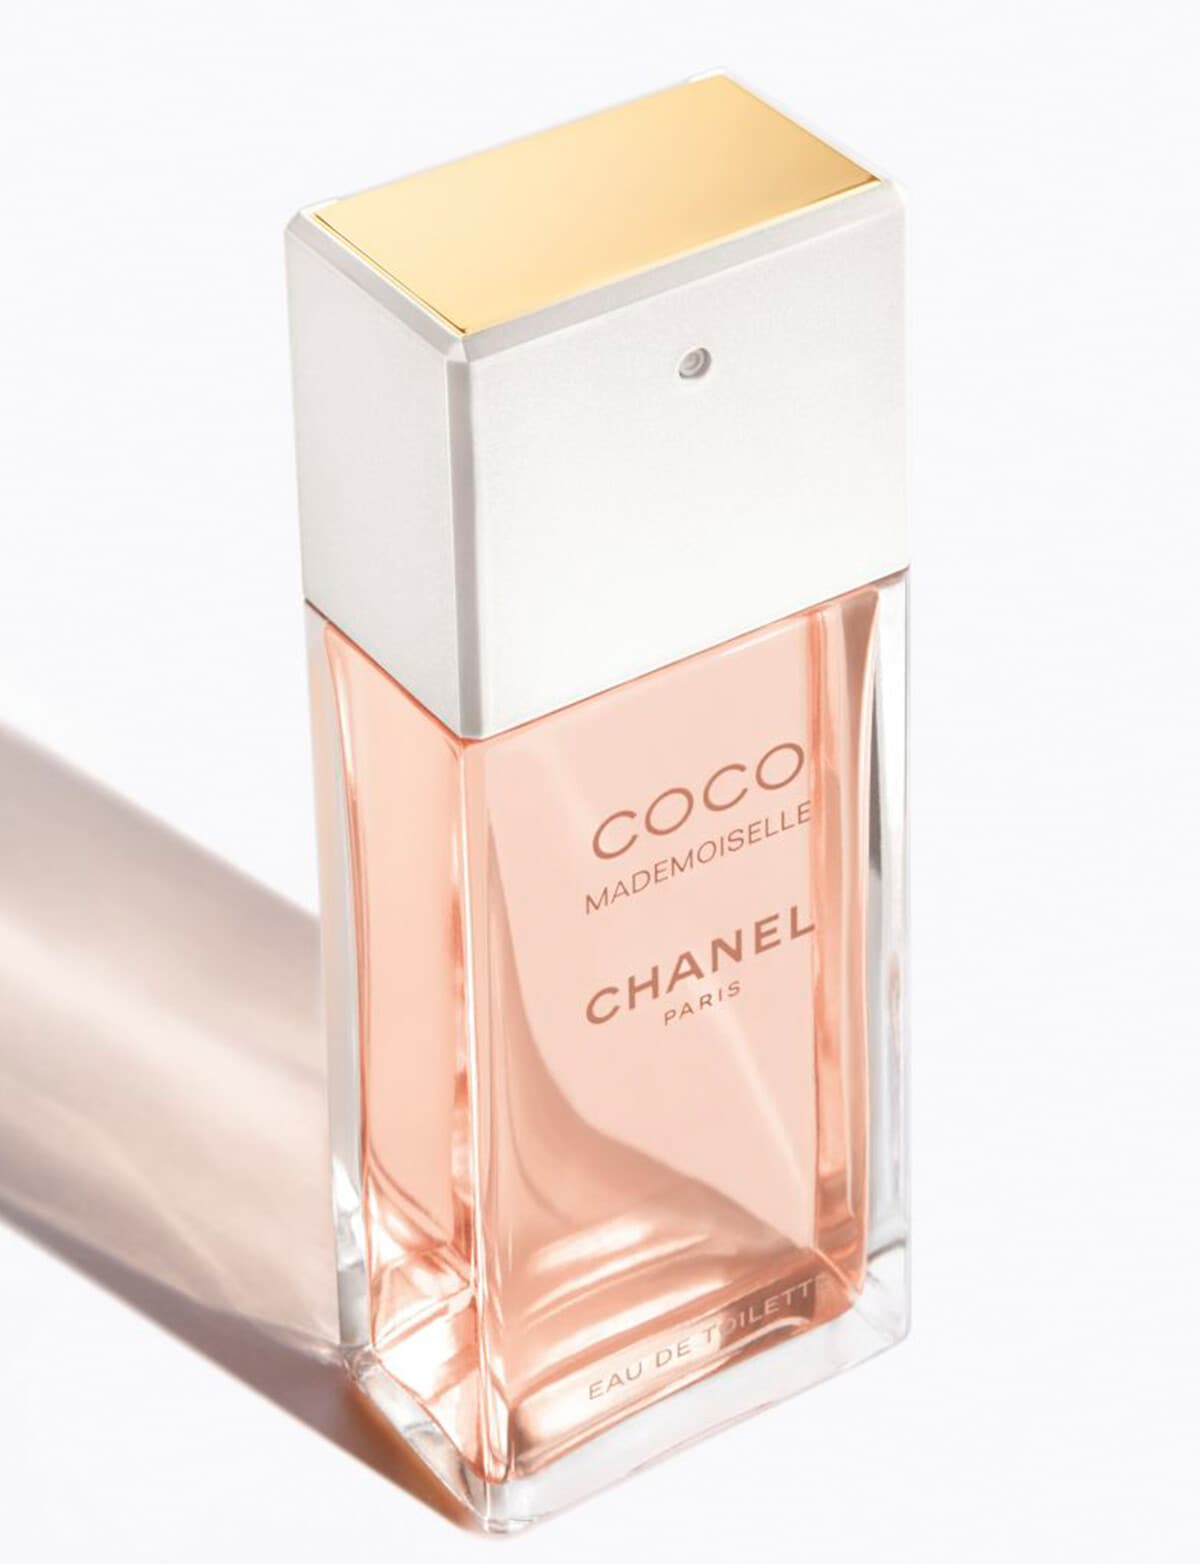 Chanel Coco Mademoiselle Eau de Toilette Spray For Women, 1.7 Oz 